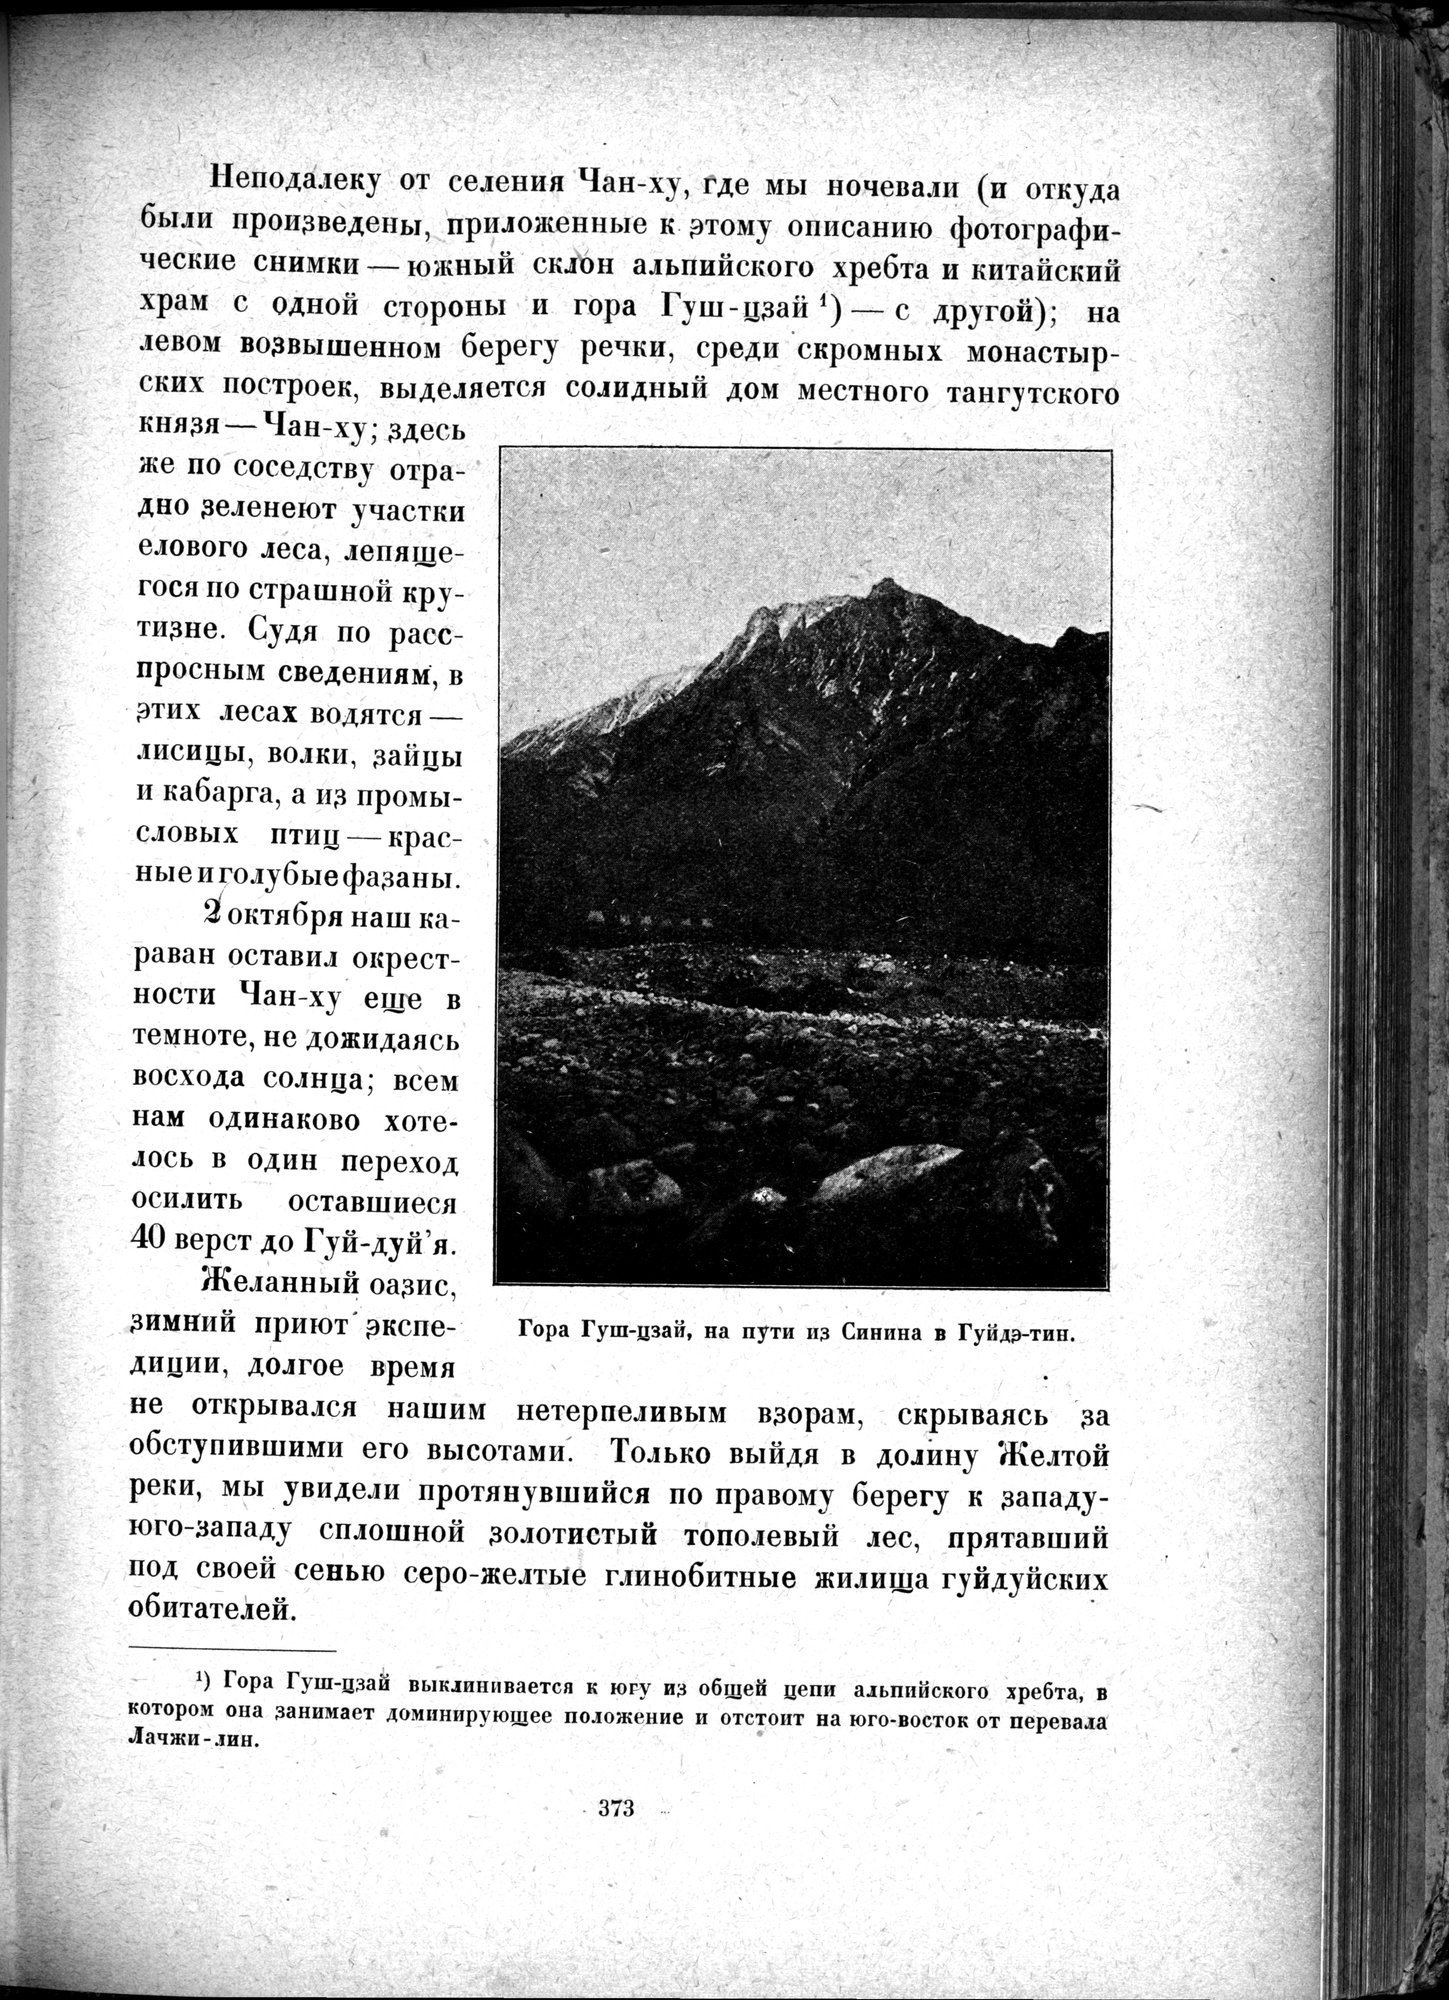 Mongoliya i Amdo i mertby gorod Khara-Khoto : vol.1 / Page 423 (Grayscale High Resolution Image)